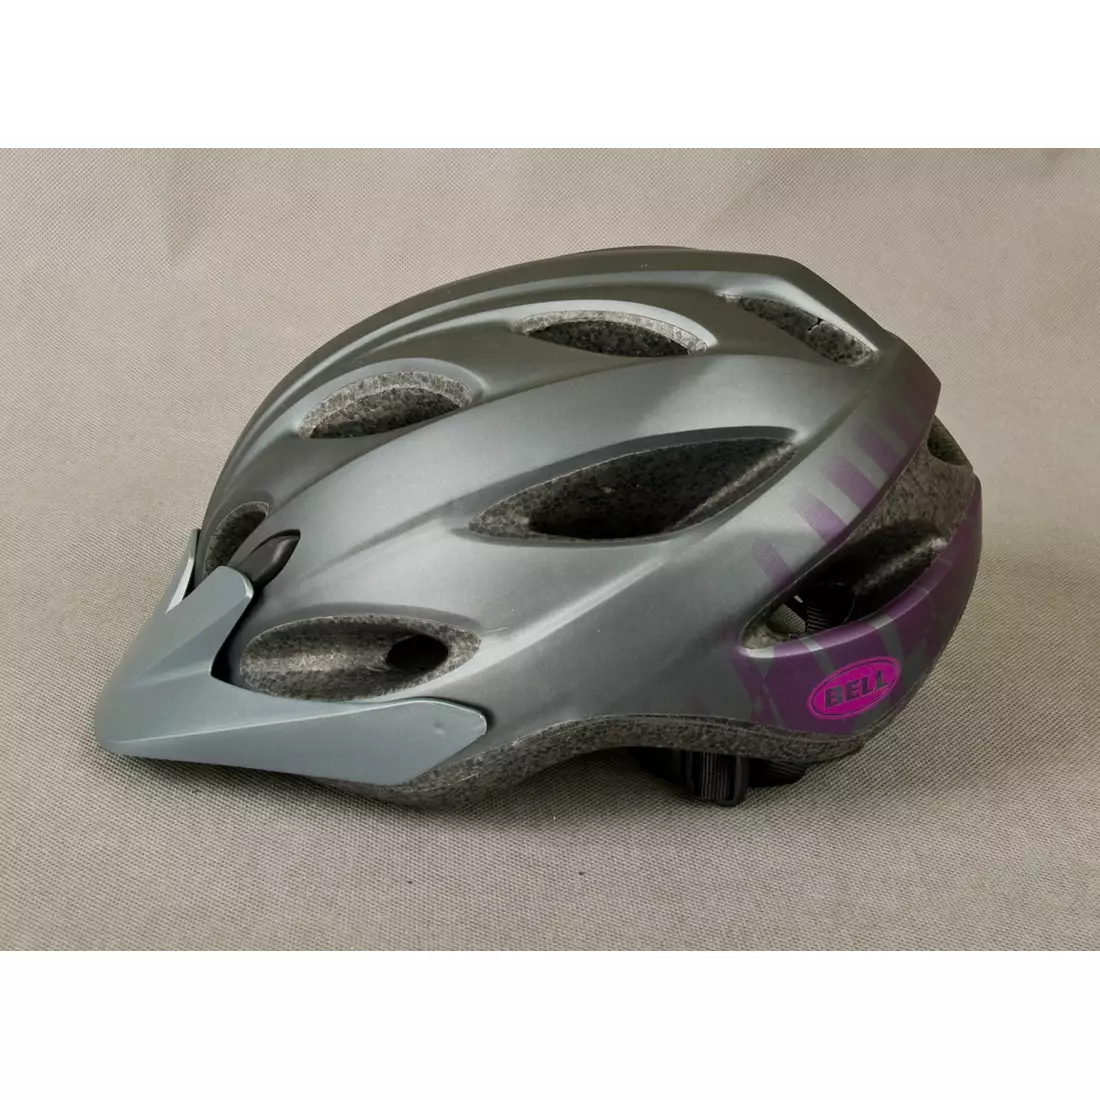 Casca de bicicleta BELL dama STRUT titan-violet mat